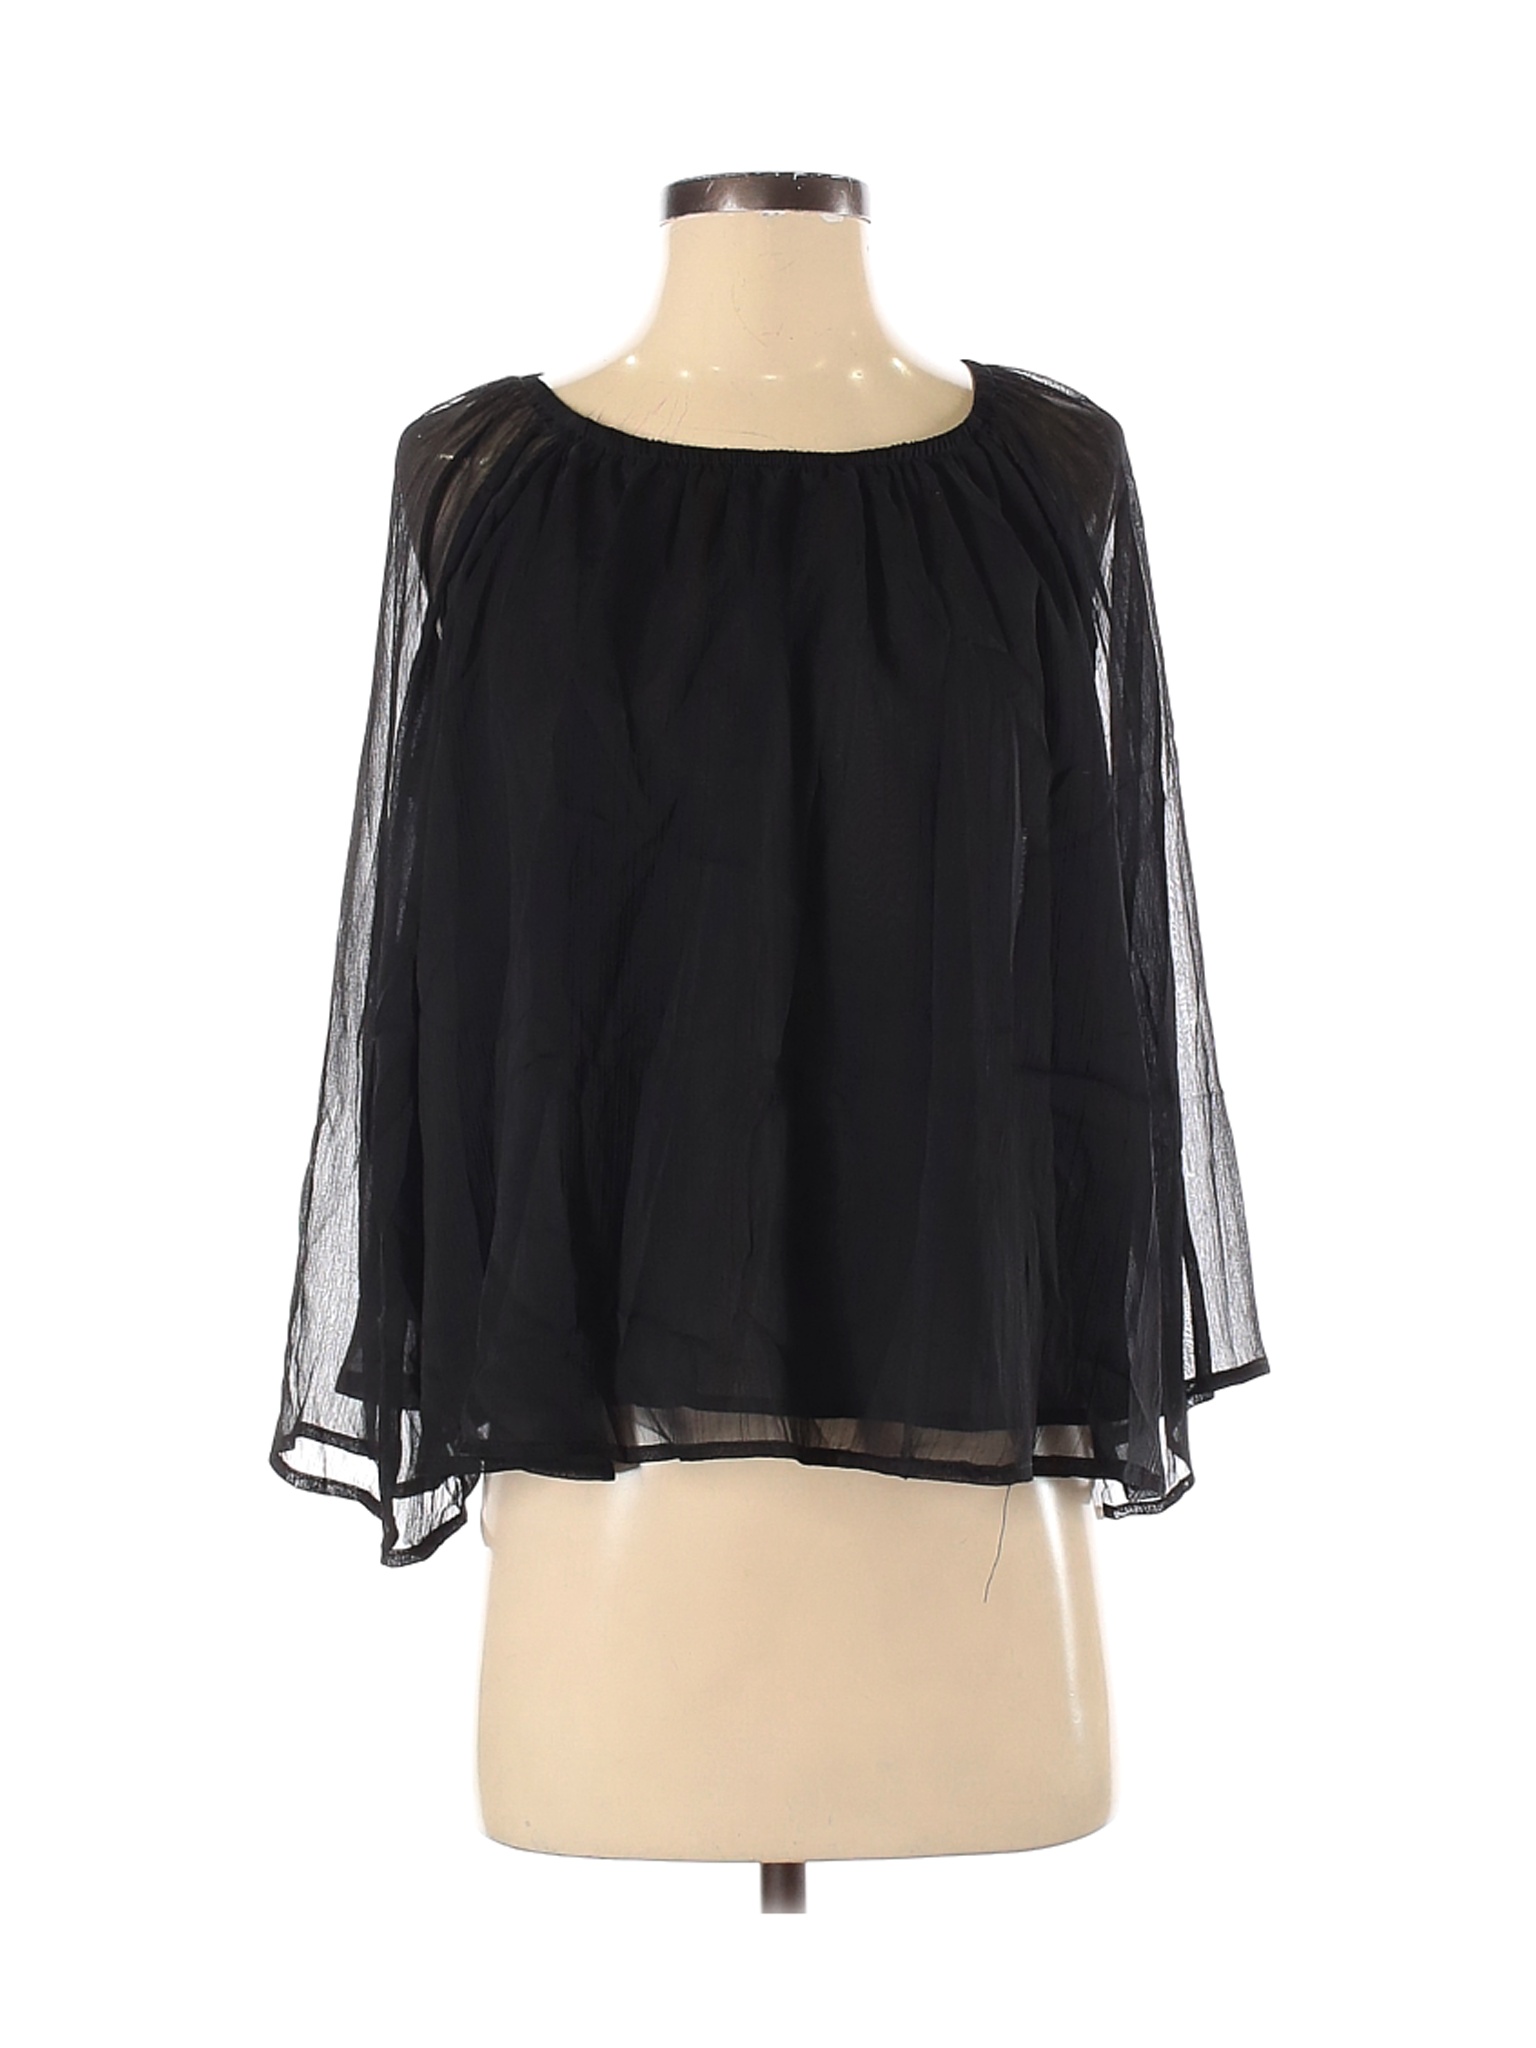 NWT Cotton On Women Black Long Sleeve Blouse S | eBay